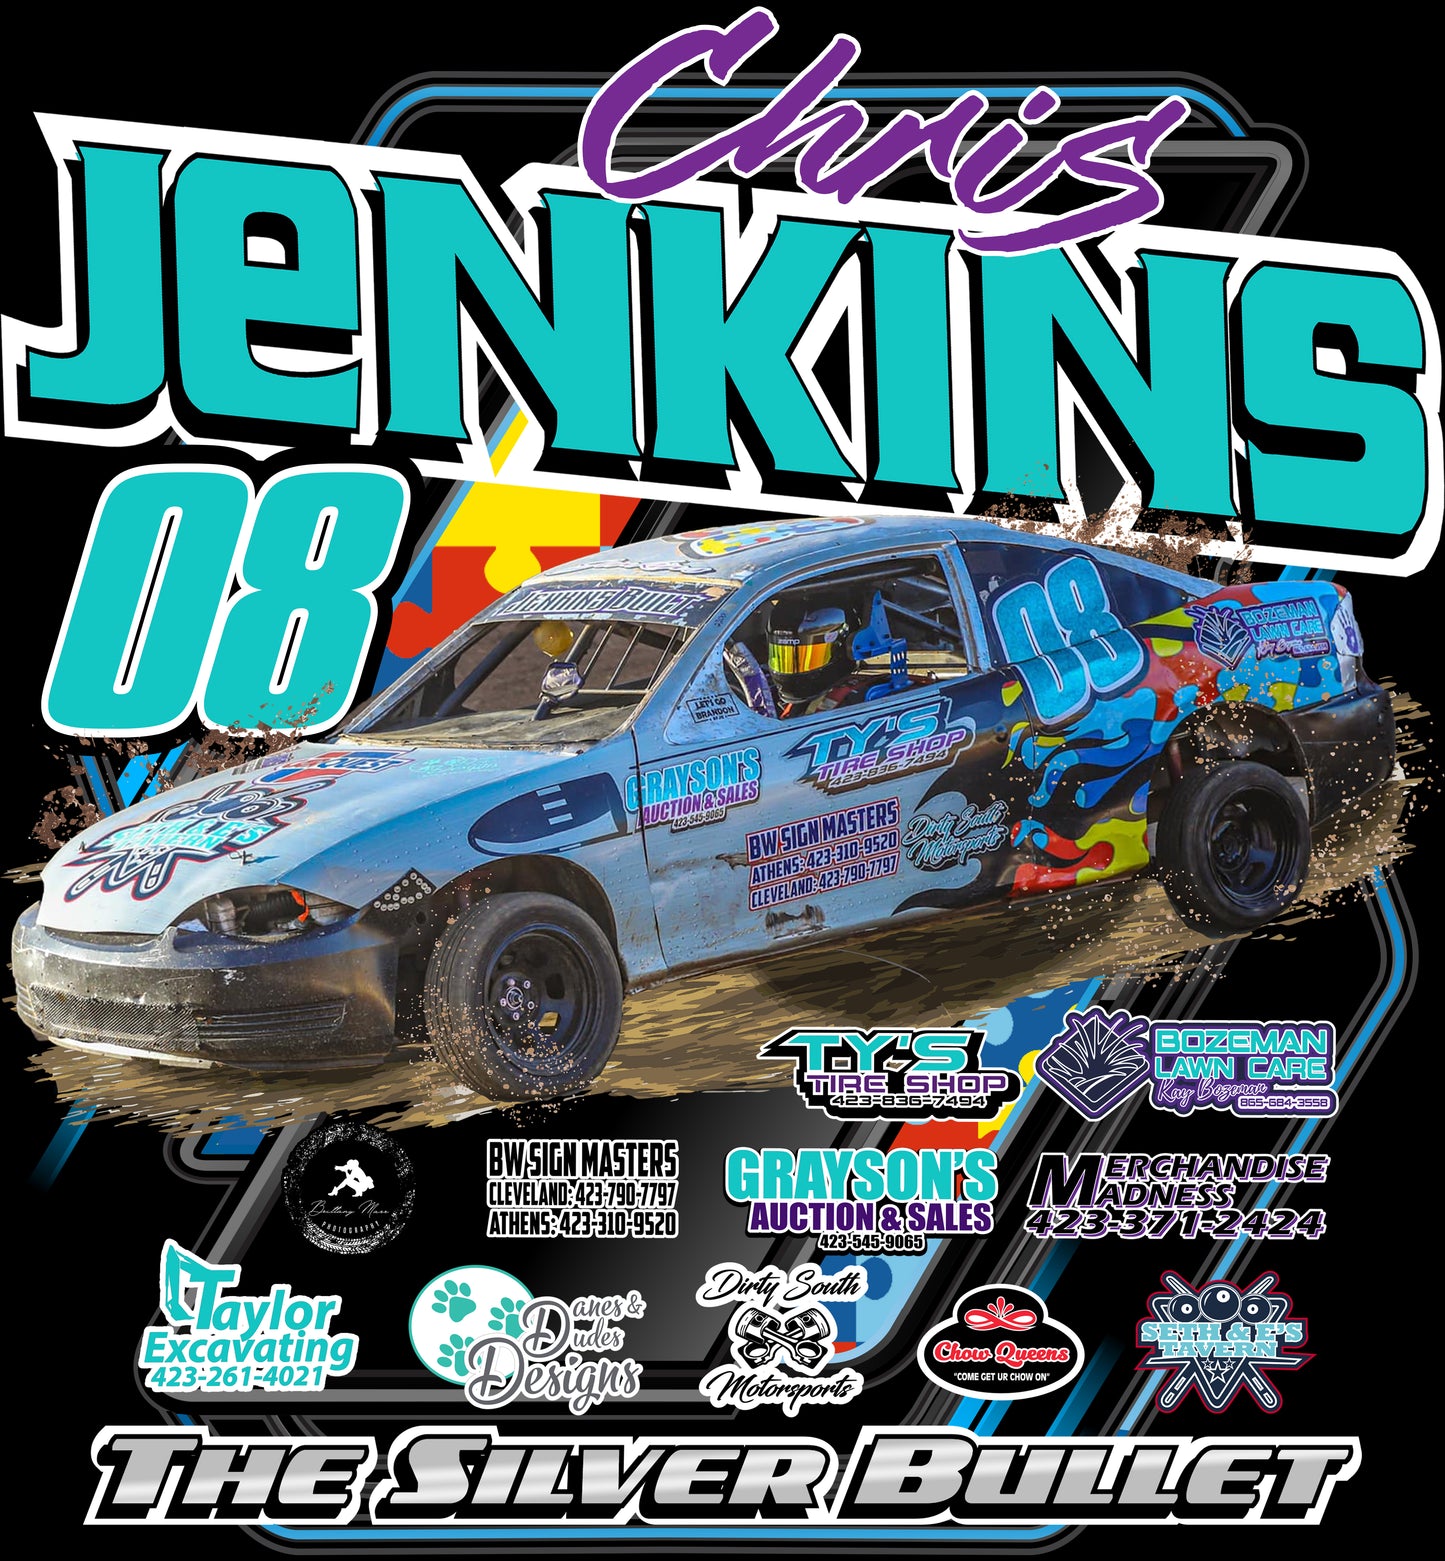 Chris Jenkins Racing Shirts 2023 (Hoodie)